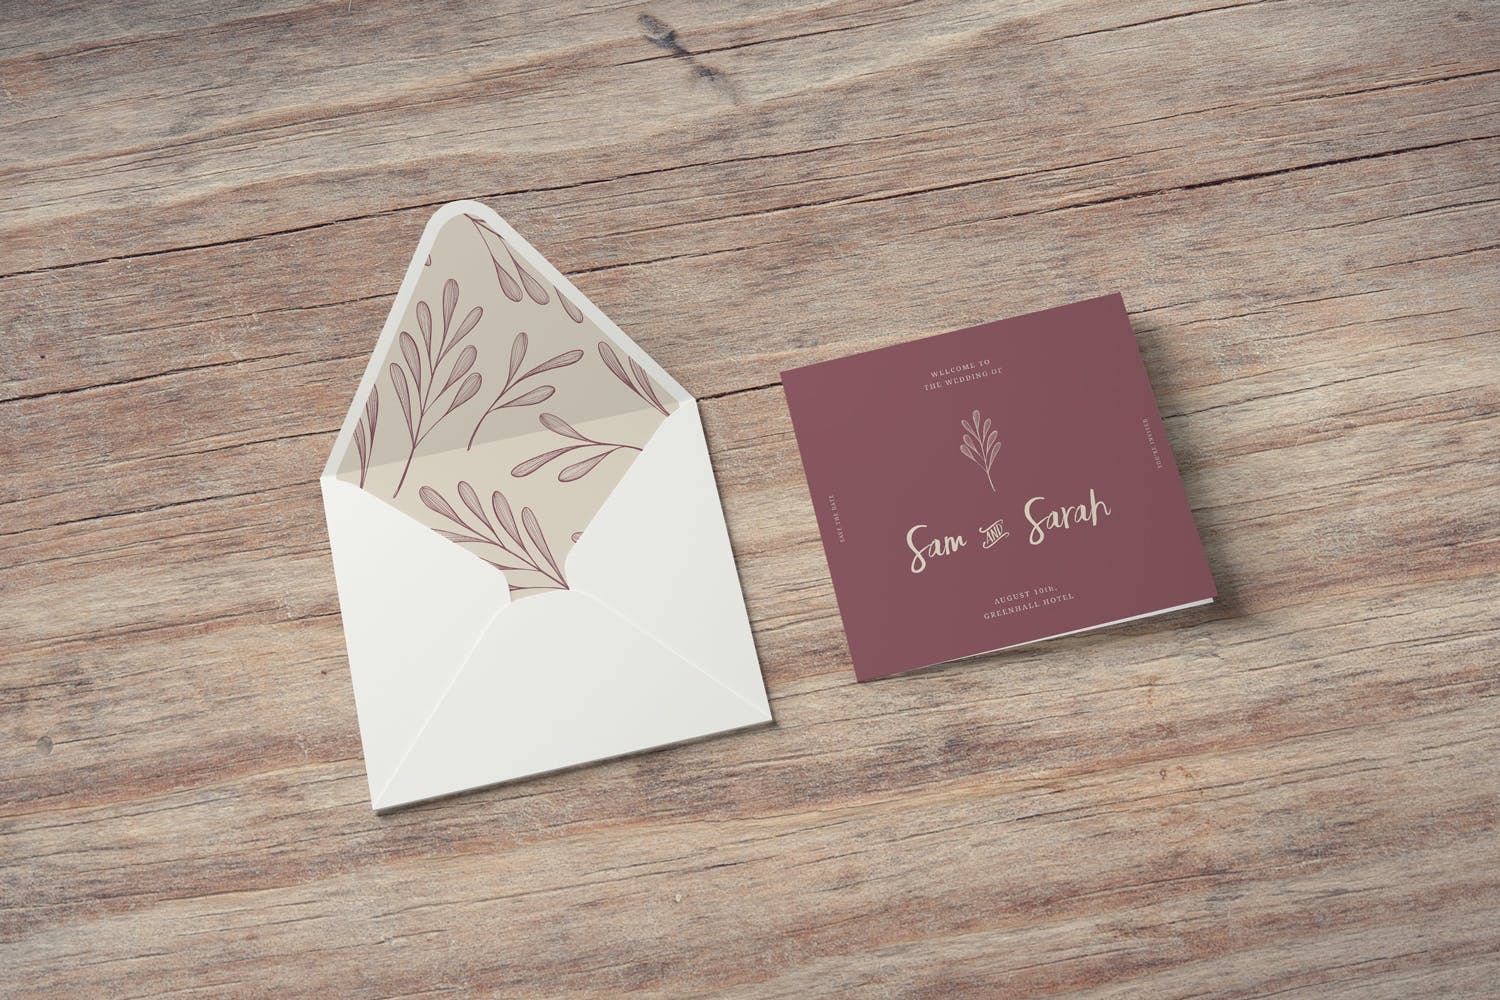 方形请柬和贺卡设计效果图样机第一素材精选 Square Invitation and Greeting Card Mockups插图(1)